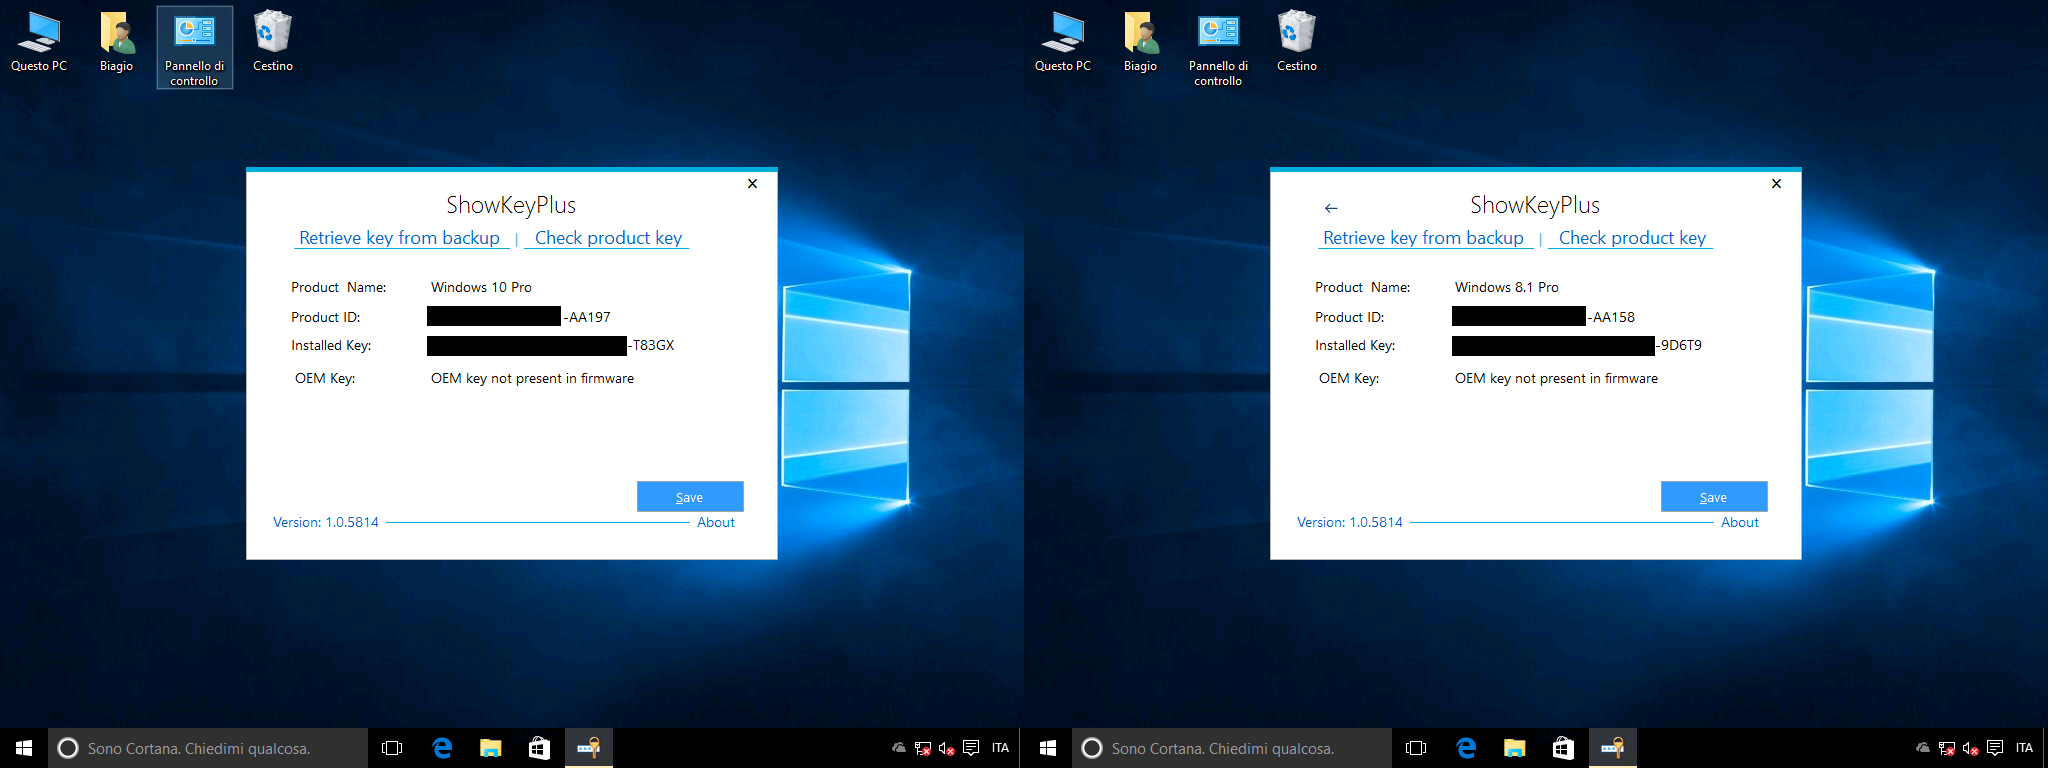 Product Key Windows 8.1 vs Windows 10